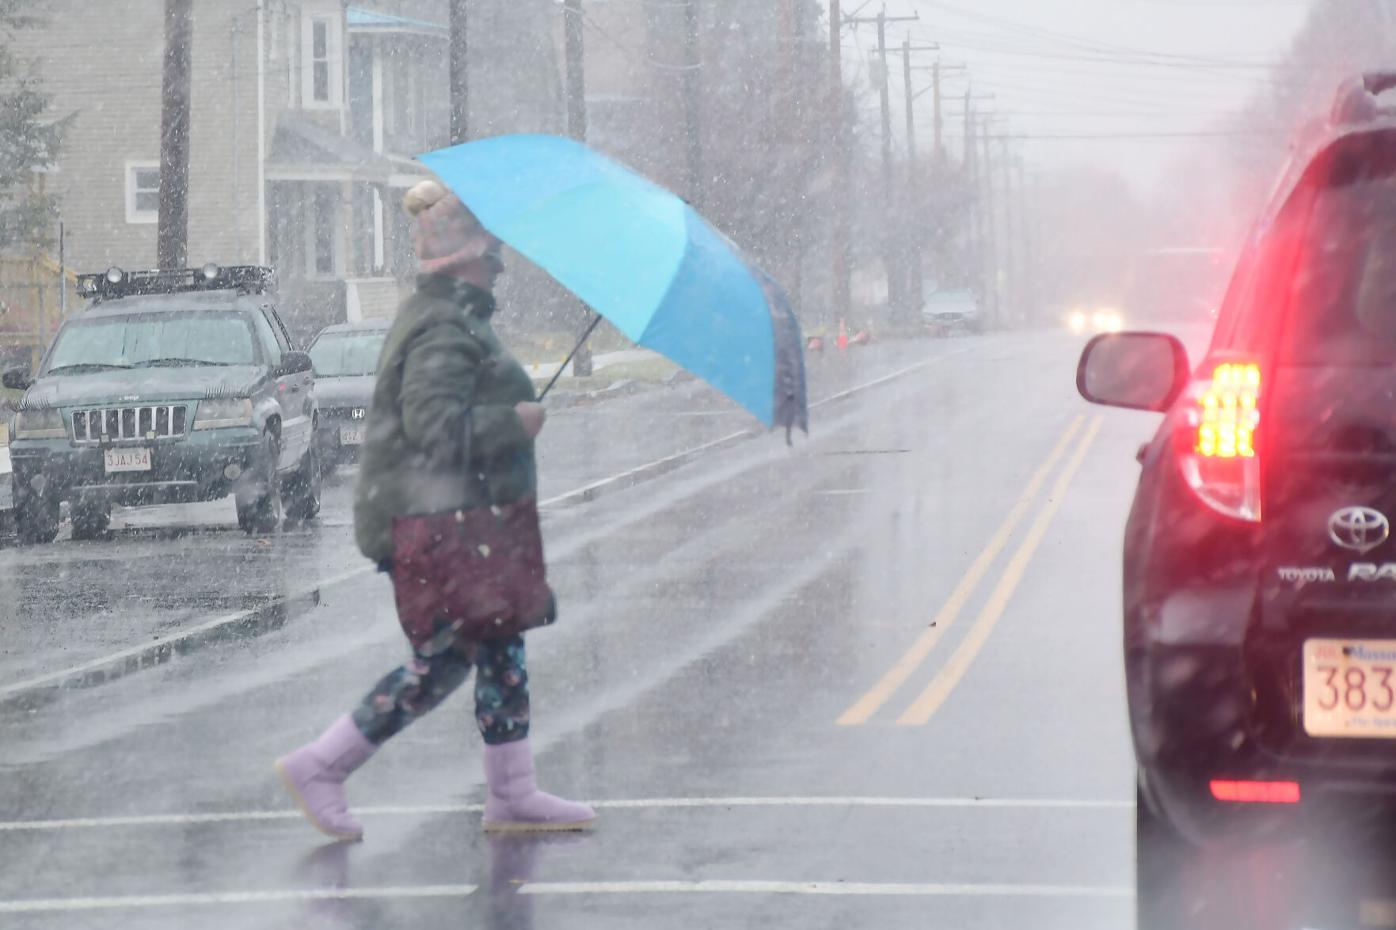 Holding an umbrella, a woman crosses the street